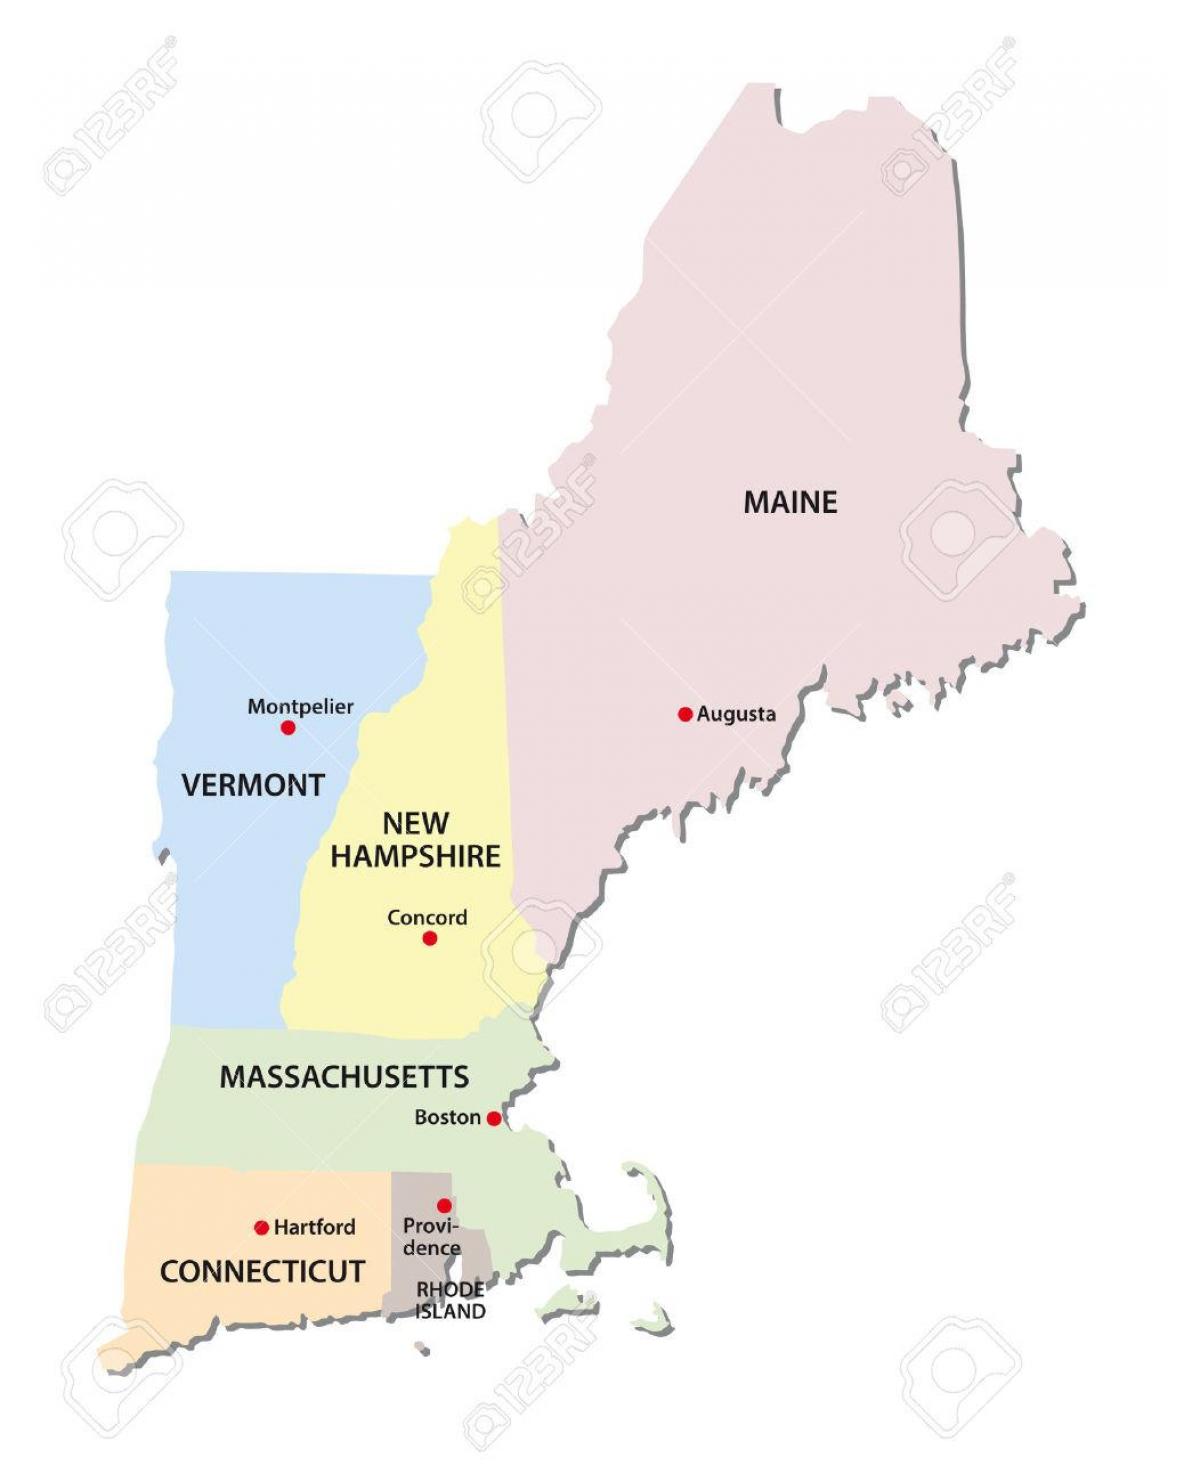 kort over New England stater